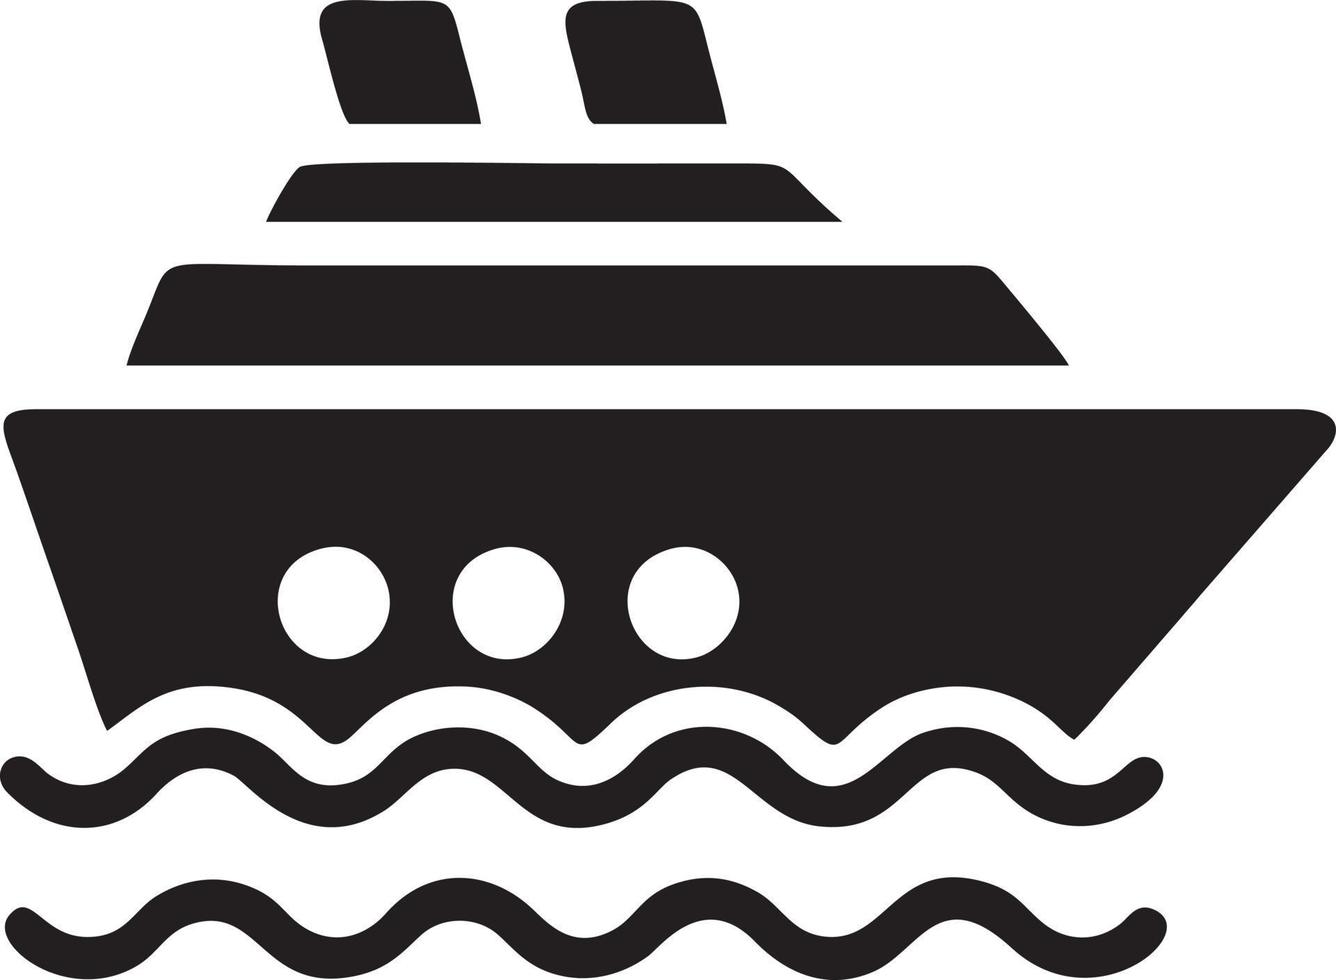 Boat icon symbol design vector image. Illustration of the ship boat transportation design image. EPS 10.